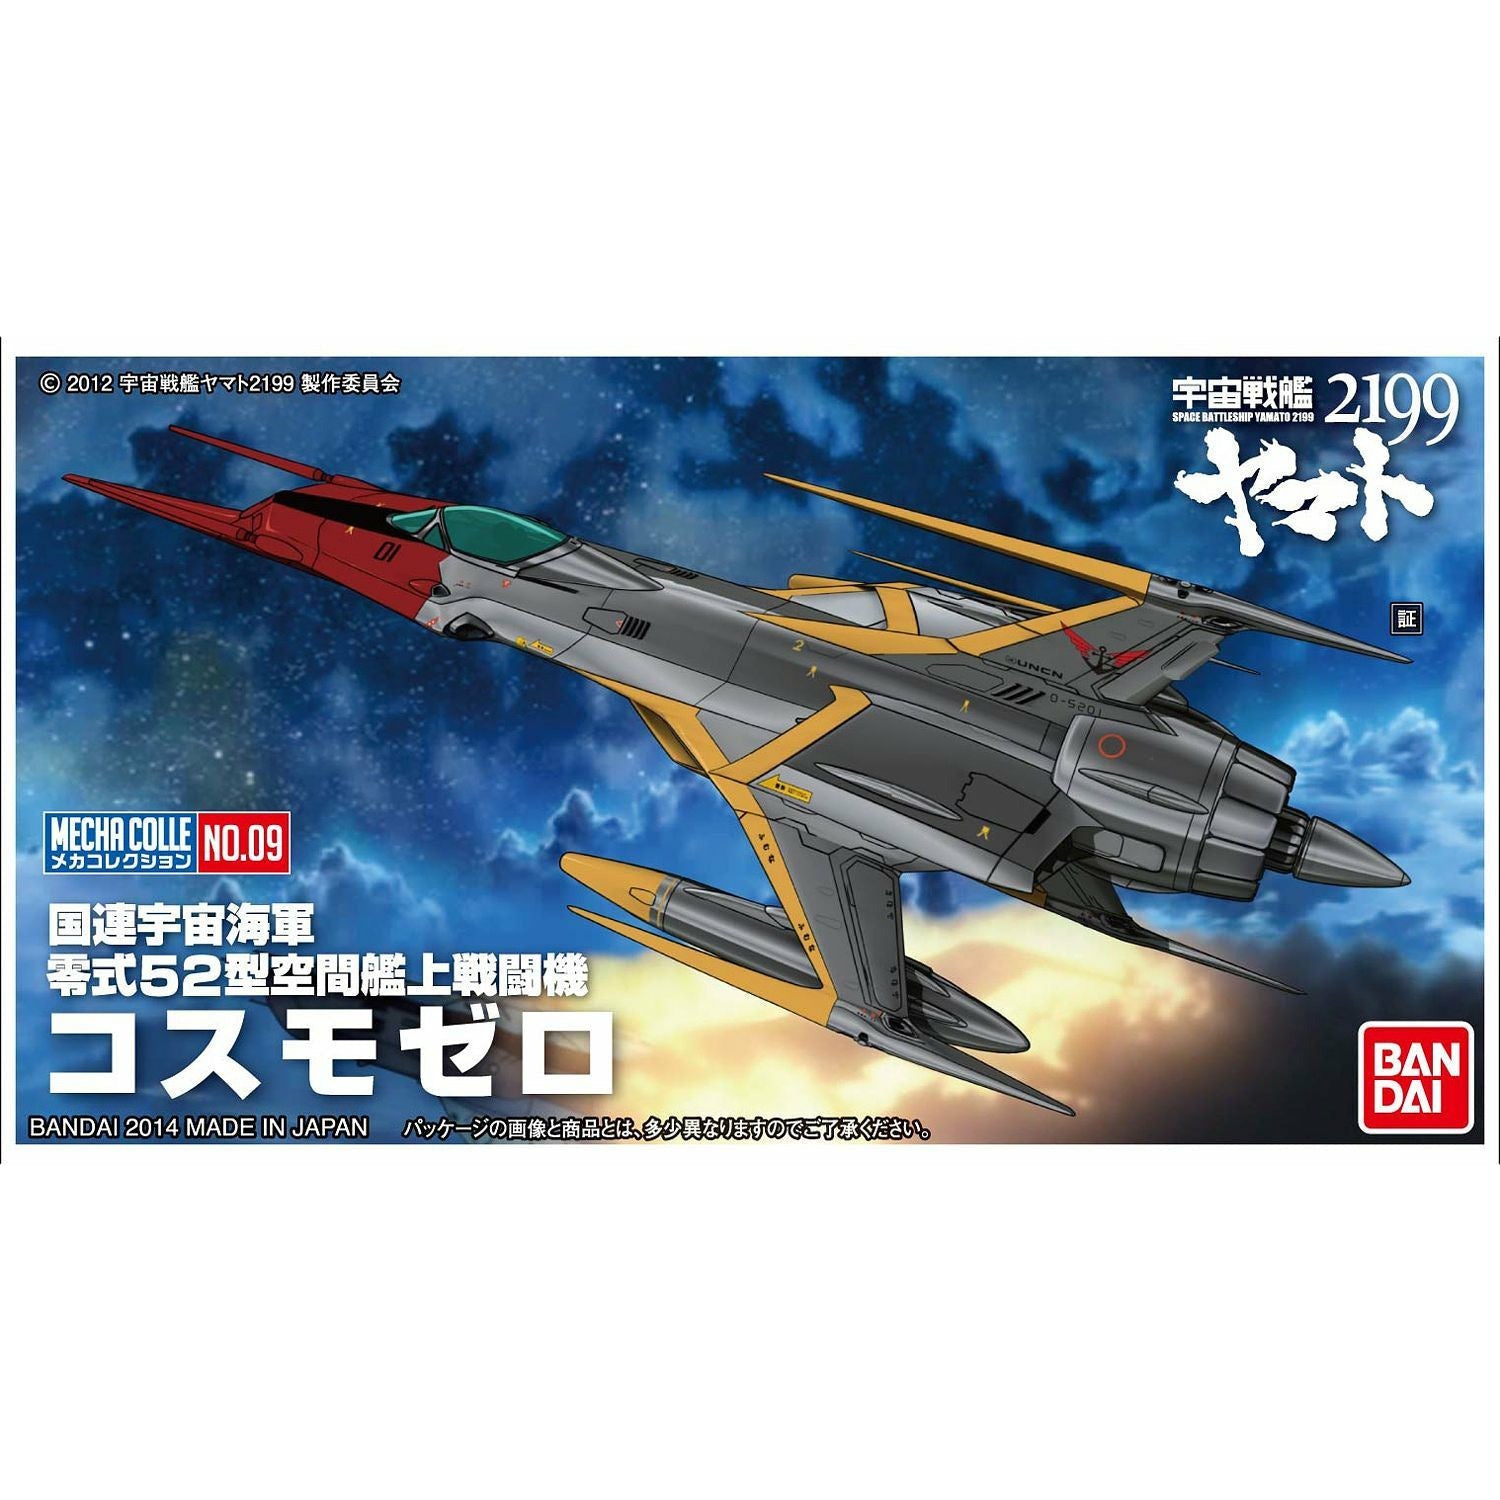 Cosmo Zero #09 Star Blazers Mecha Collection #2287123 Space Battleship Yamato 2199 by Bandai